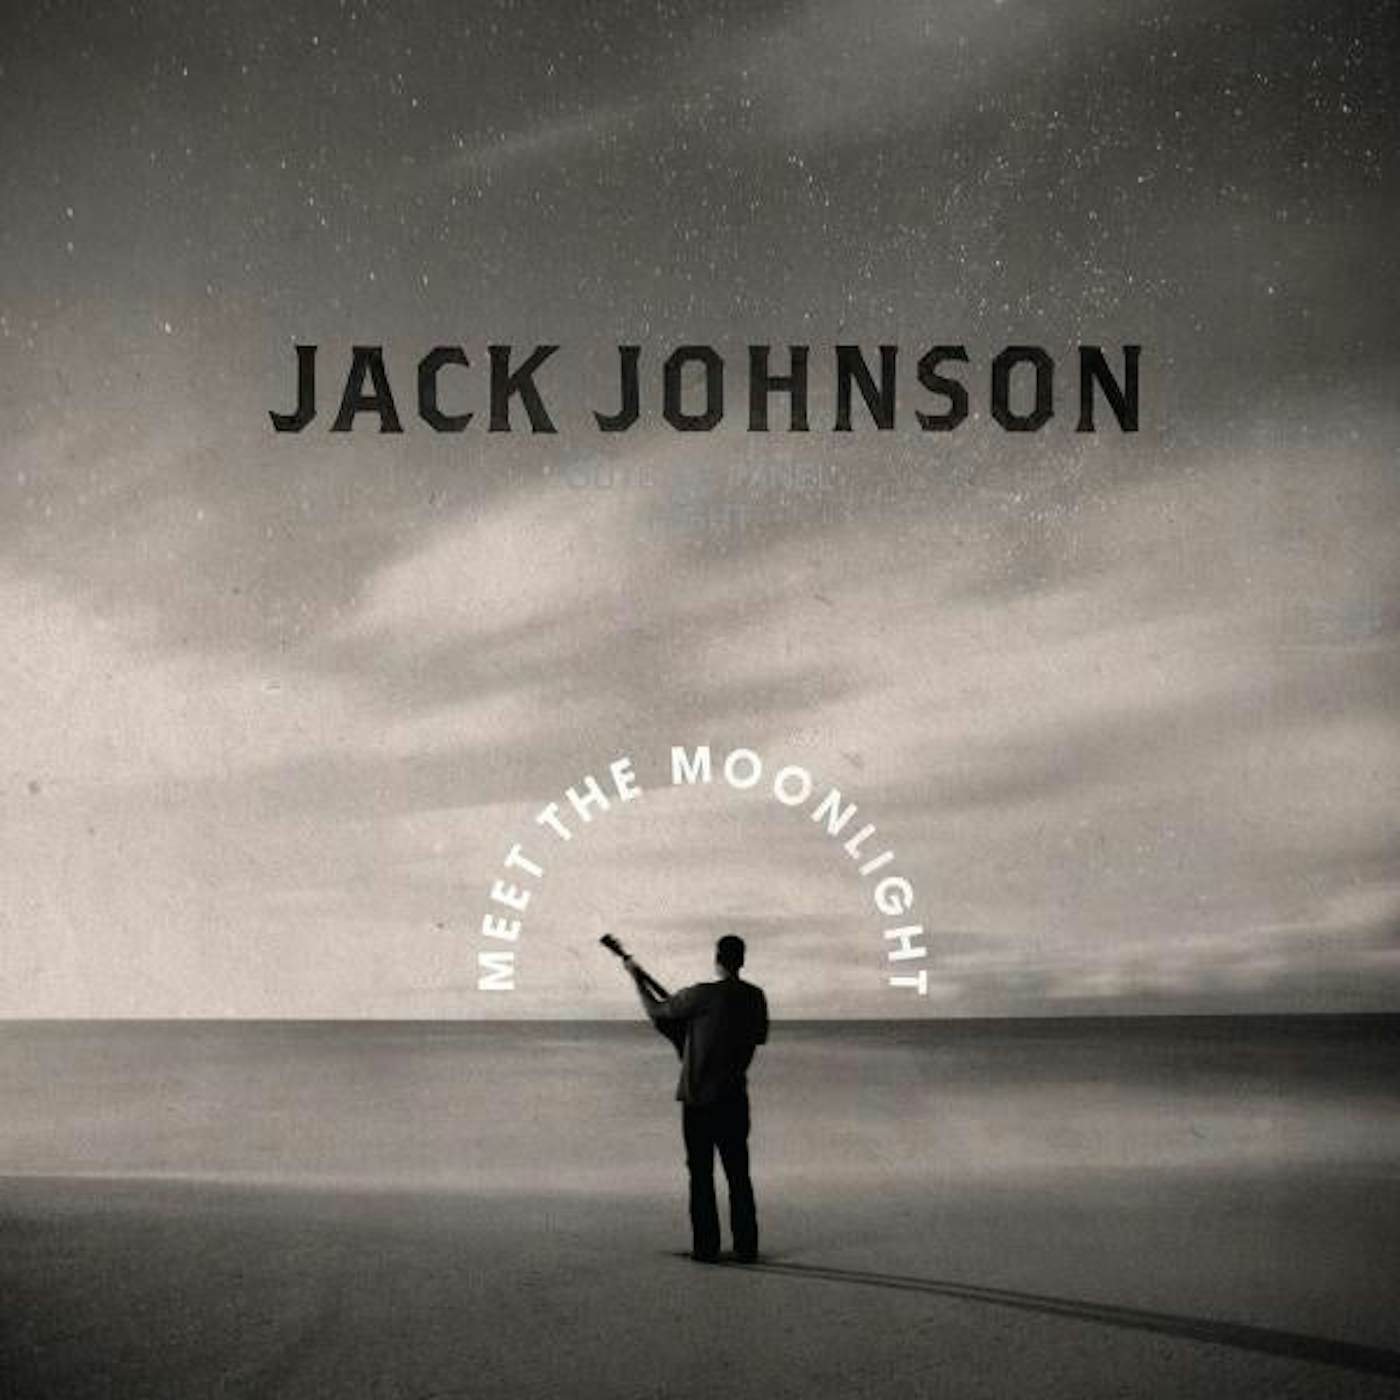 Jack Johnson Meet The Moonlight Vinyl Record